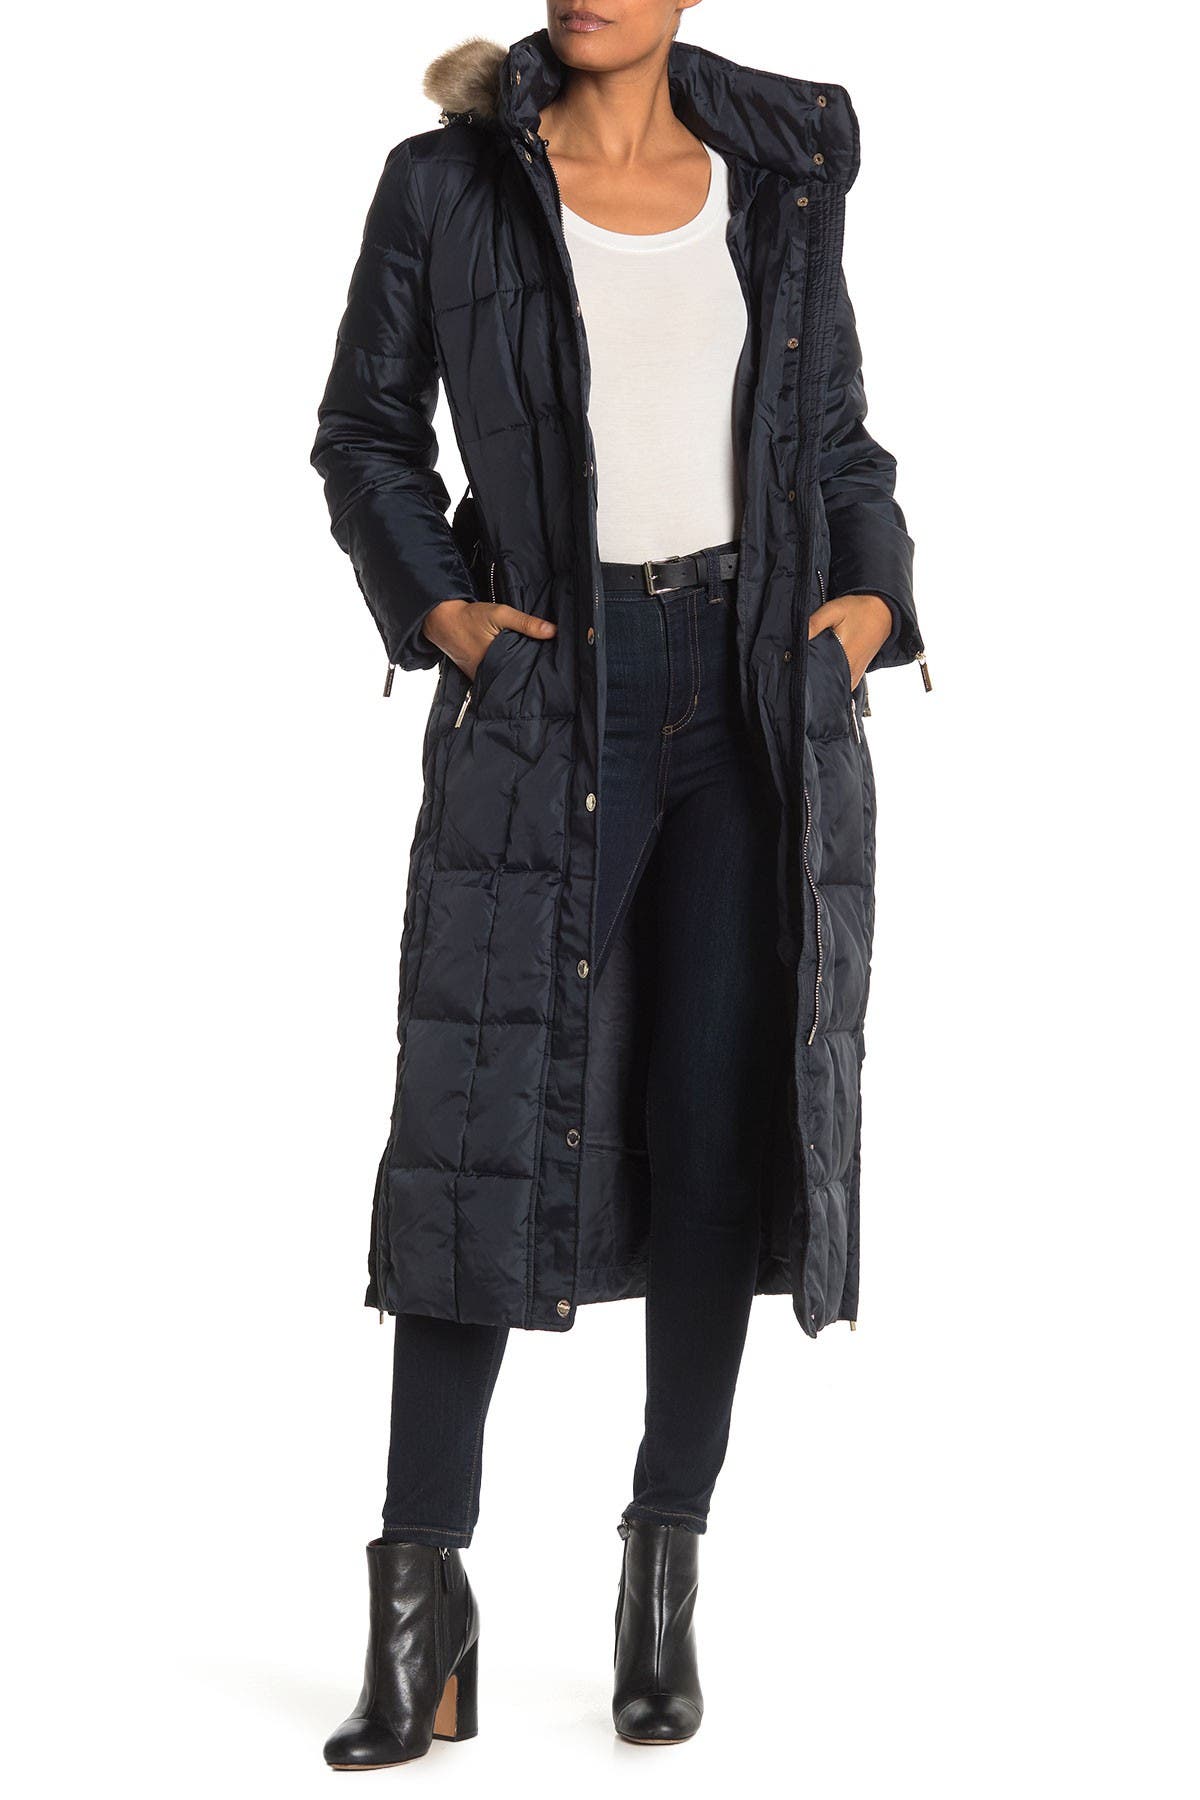 michael kors full length coat